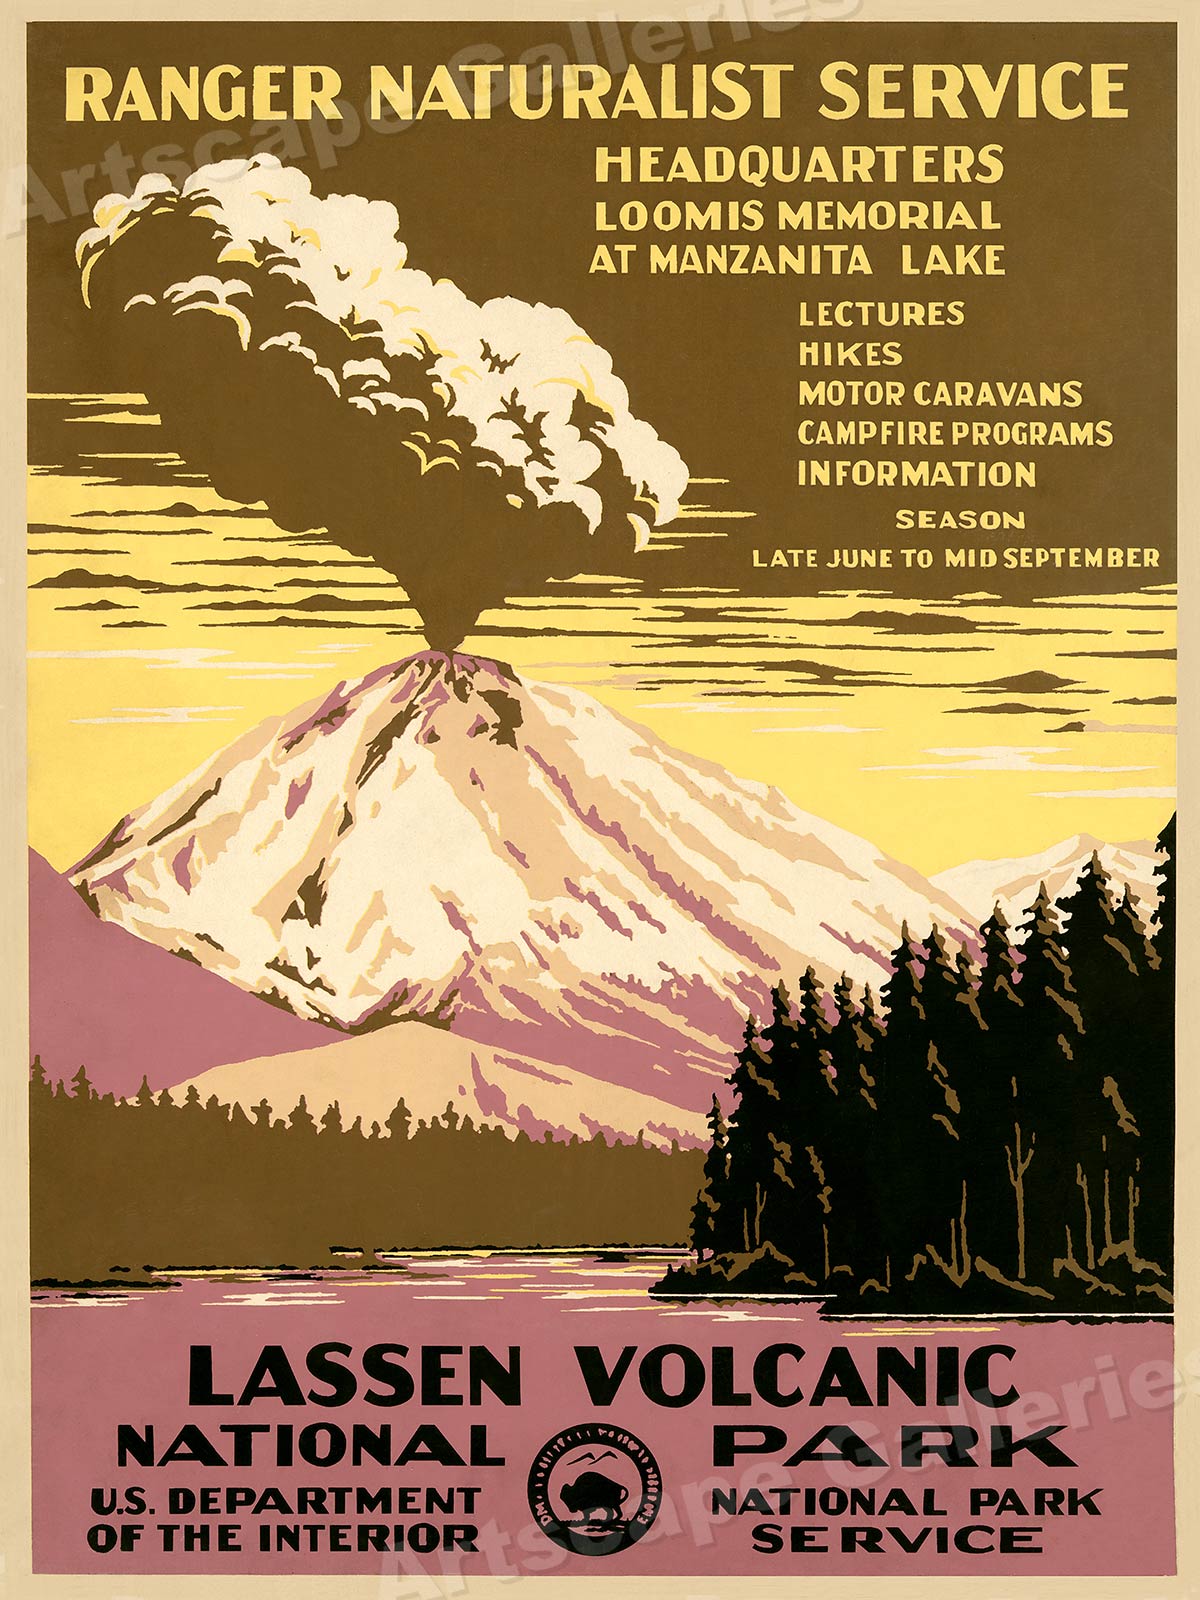 24x32 1930s Lassen Volcanic Ranger Naturalist Vintage Style Travel Poster